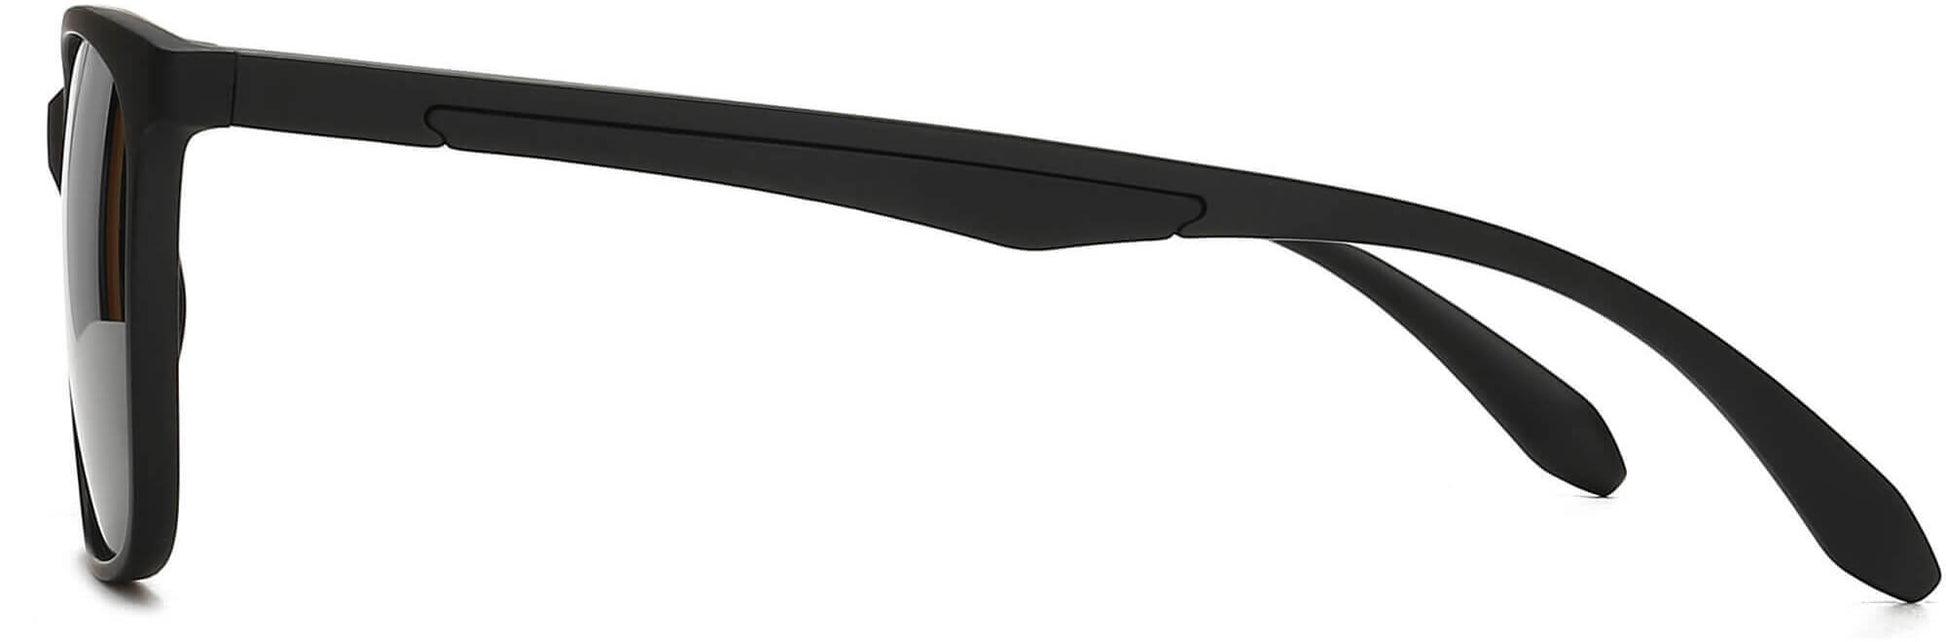 Adair Black TR90 Sunglasses from ANRRI